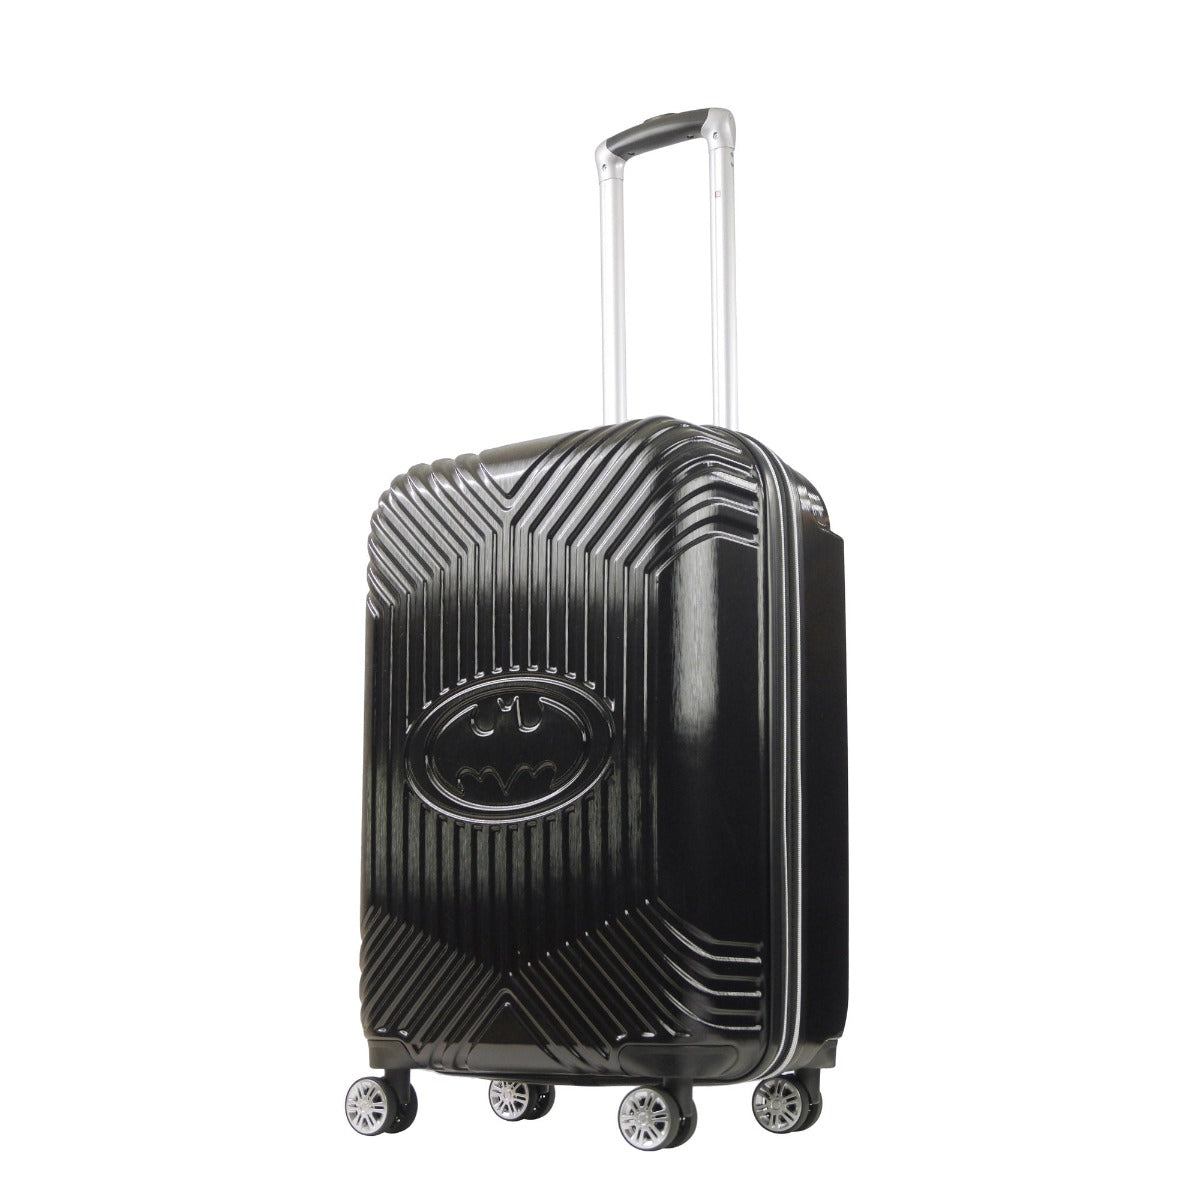 Dc Comics Batman 3D Molded Hardsided 25" Luggage Black Spinner Suitcase